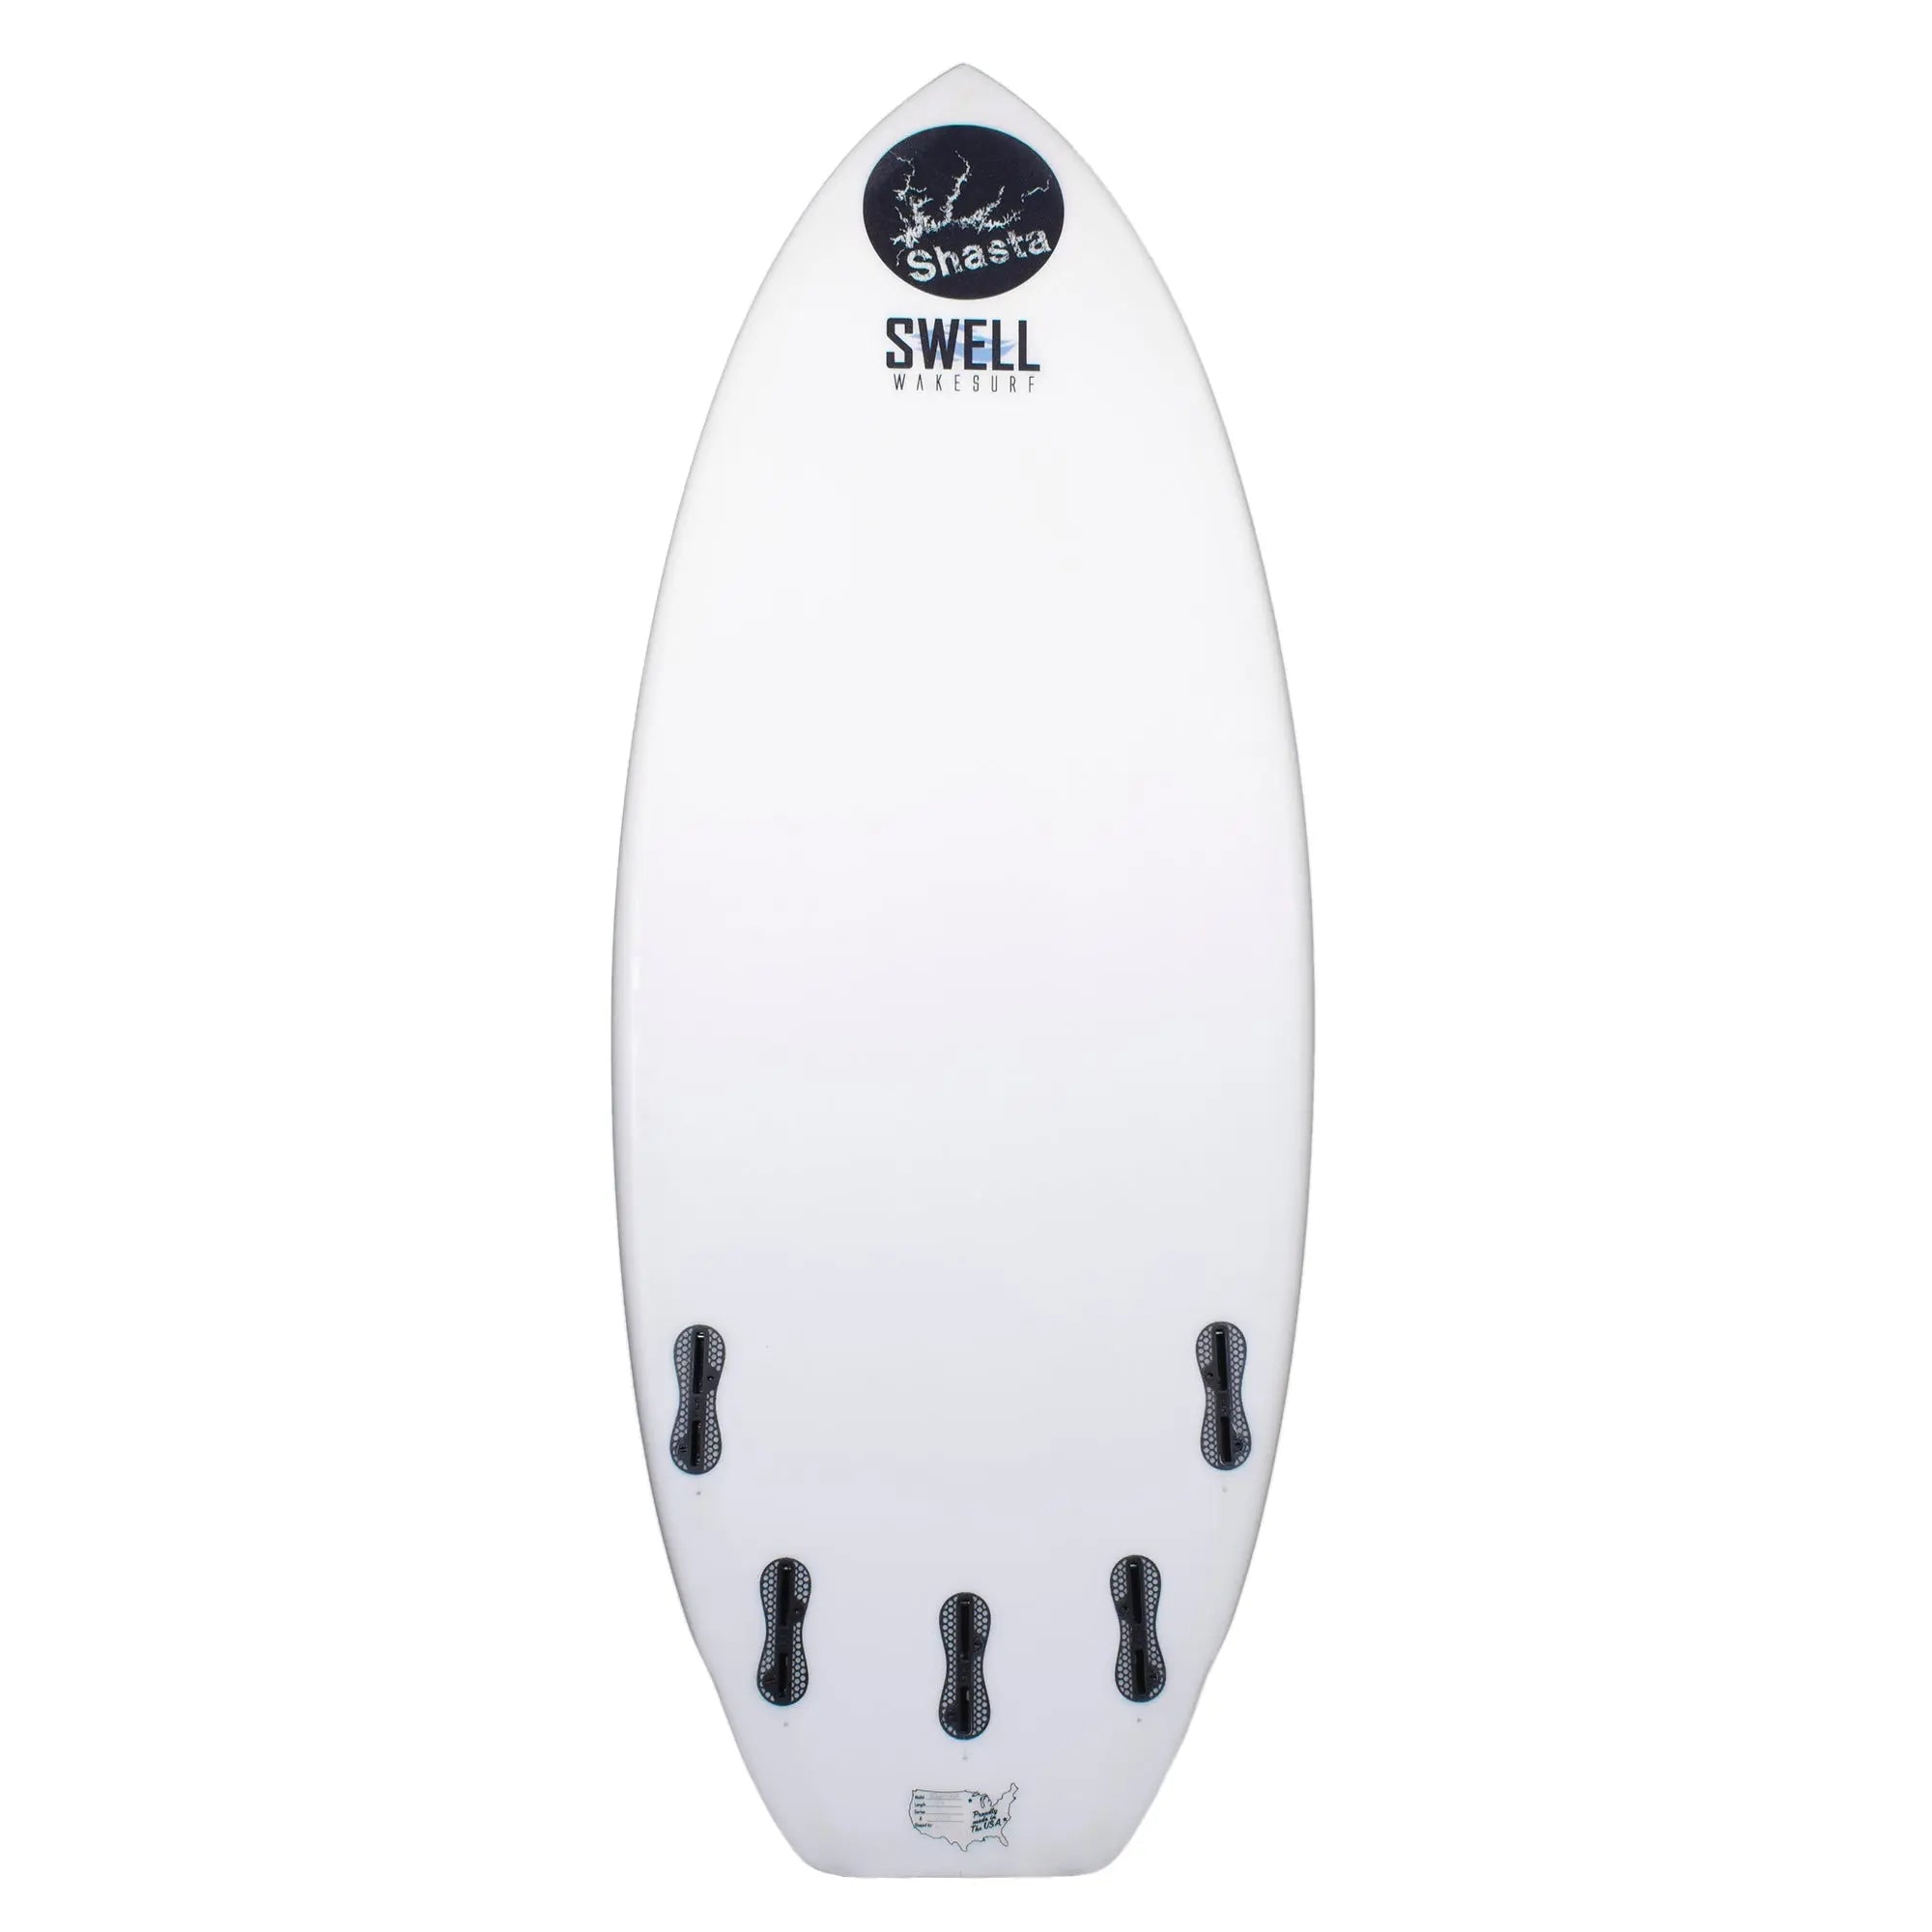 SWELL Wakesurf - Shasta Surfboard - Handmade in The USA - Board only SWELL Wakesurf